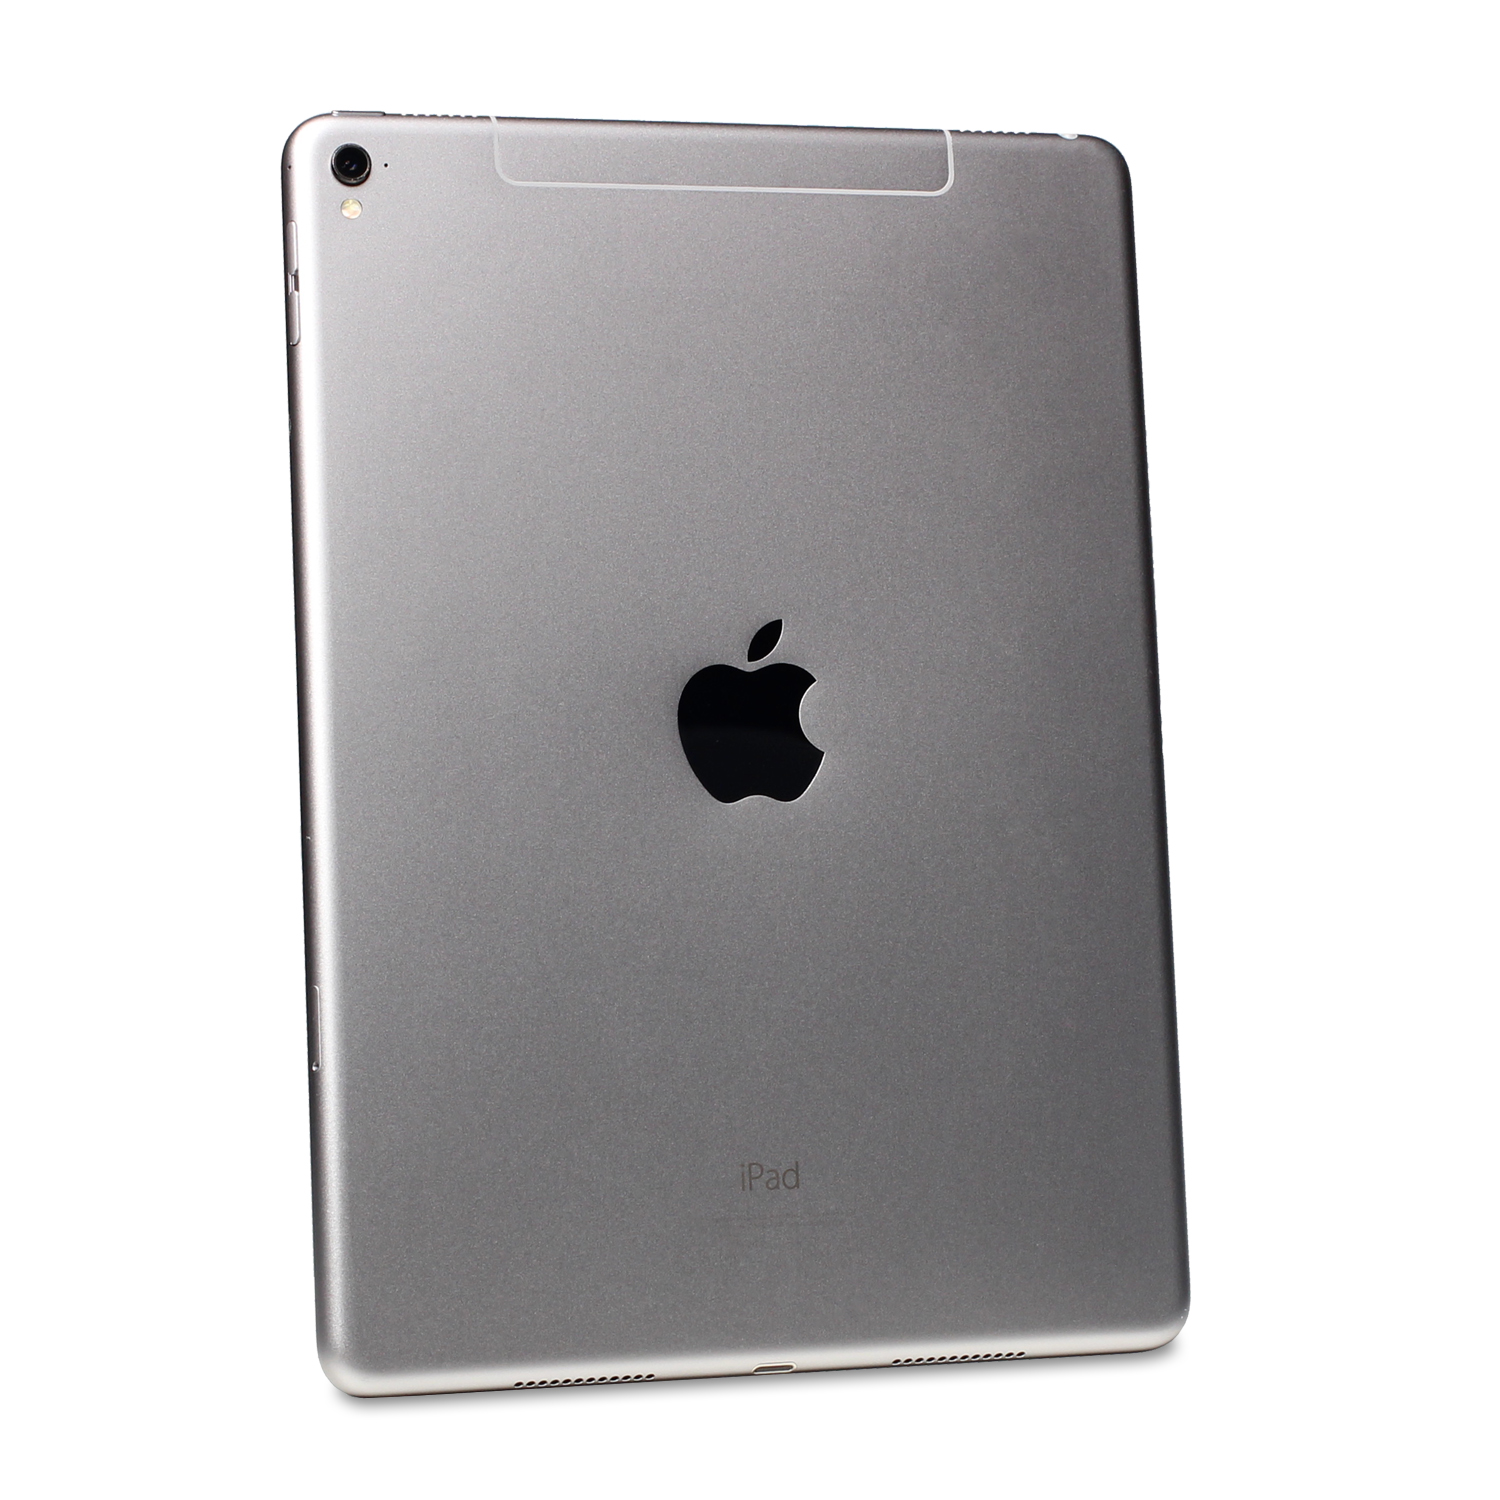 Apple, Inc. iPad Pro 9.7-inch Wi-Fi+Cellular 32GB Space Gray